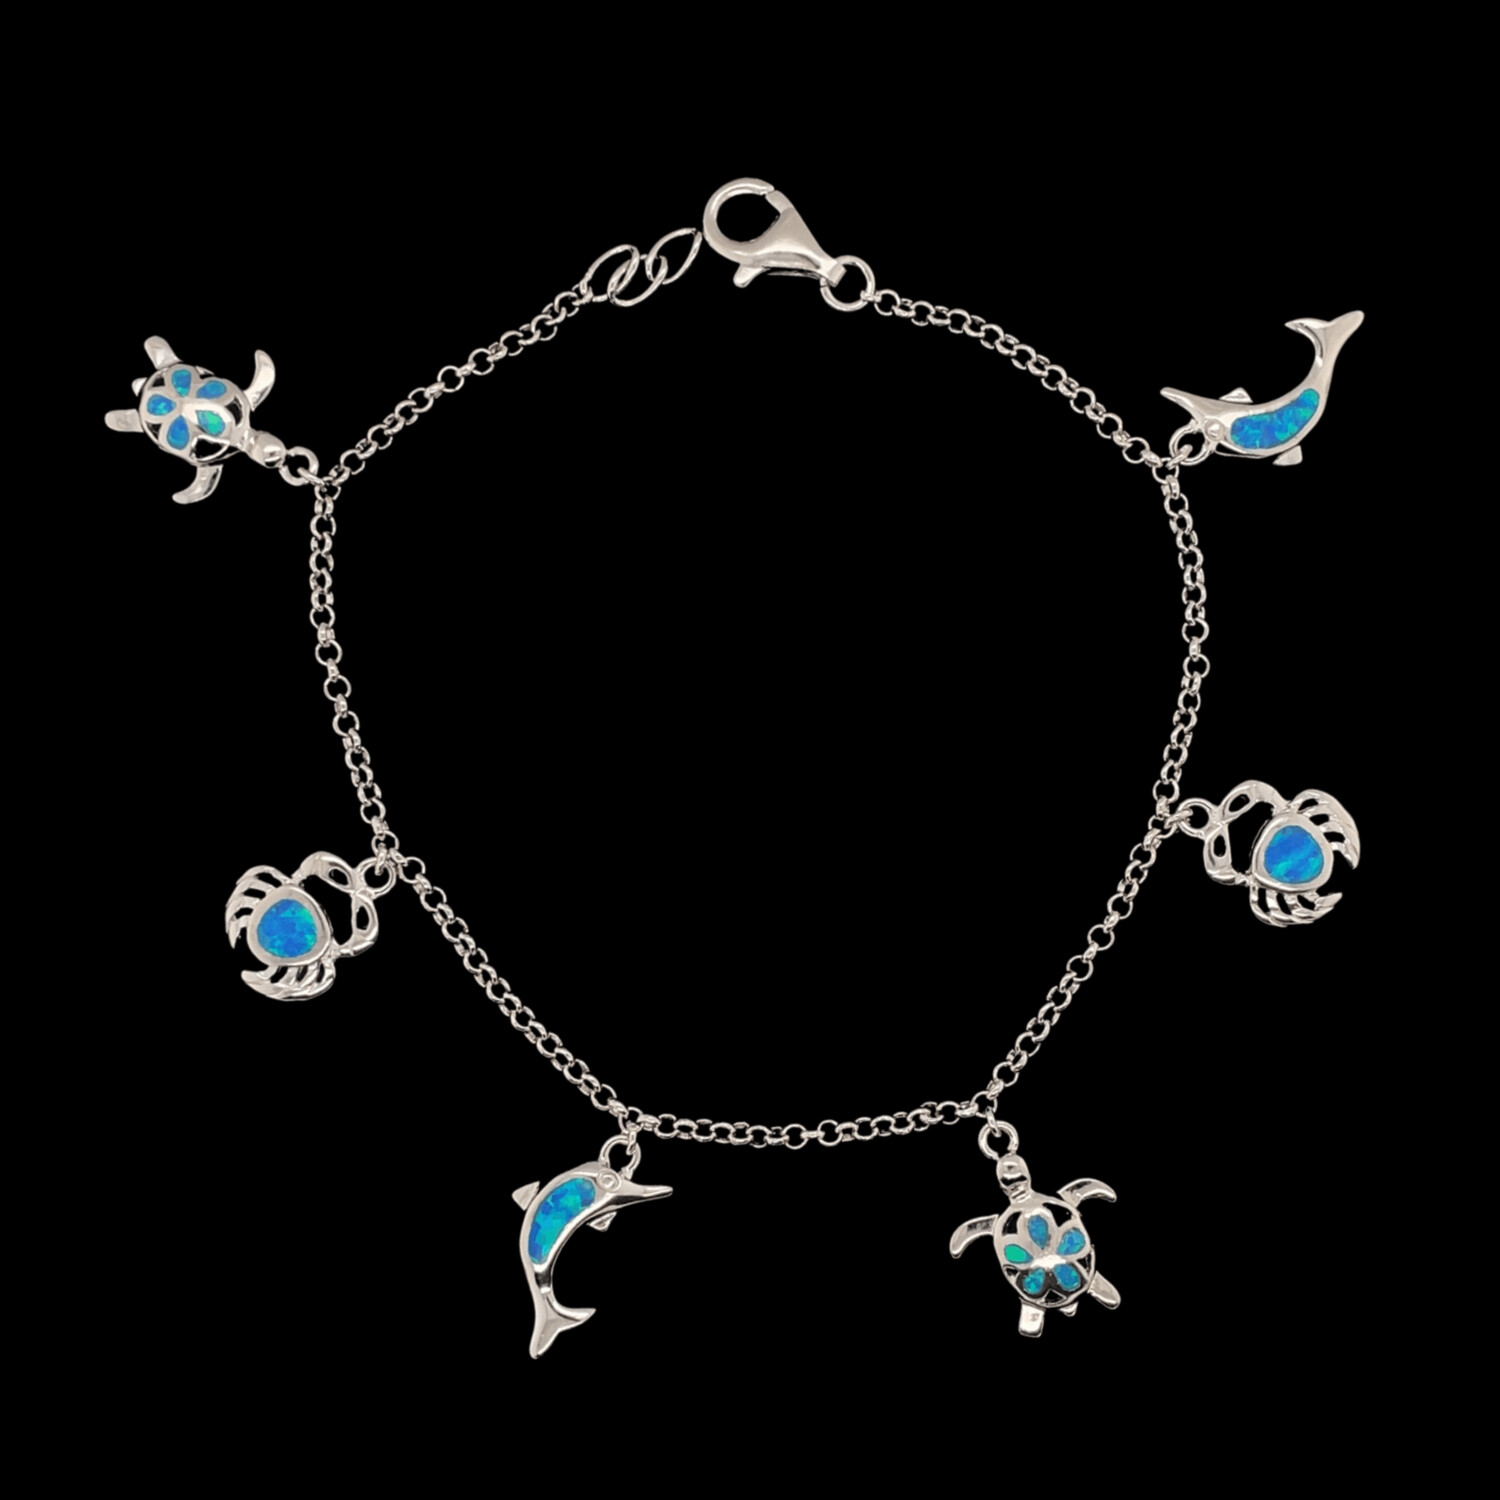 Dolphin / Crab / Turtle Bracelet ***RETIRED DESIGN***